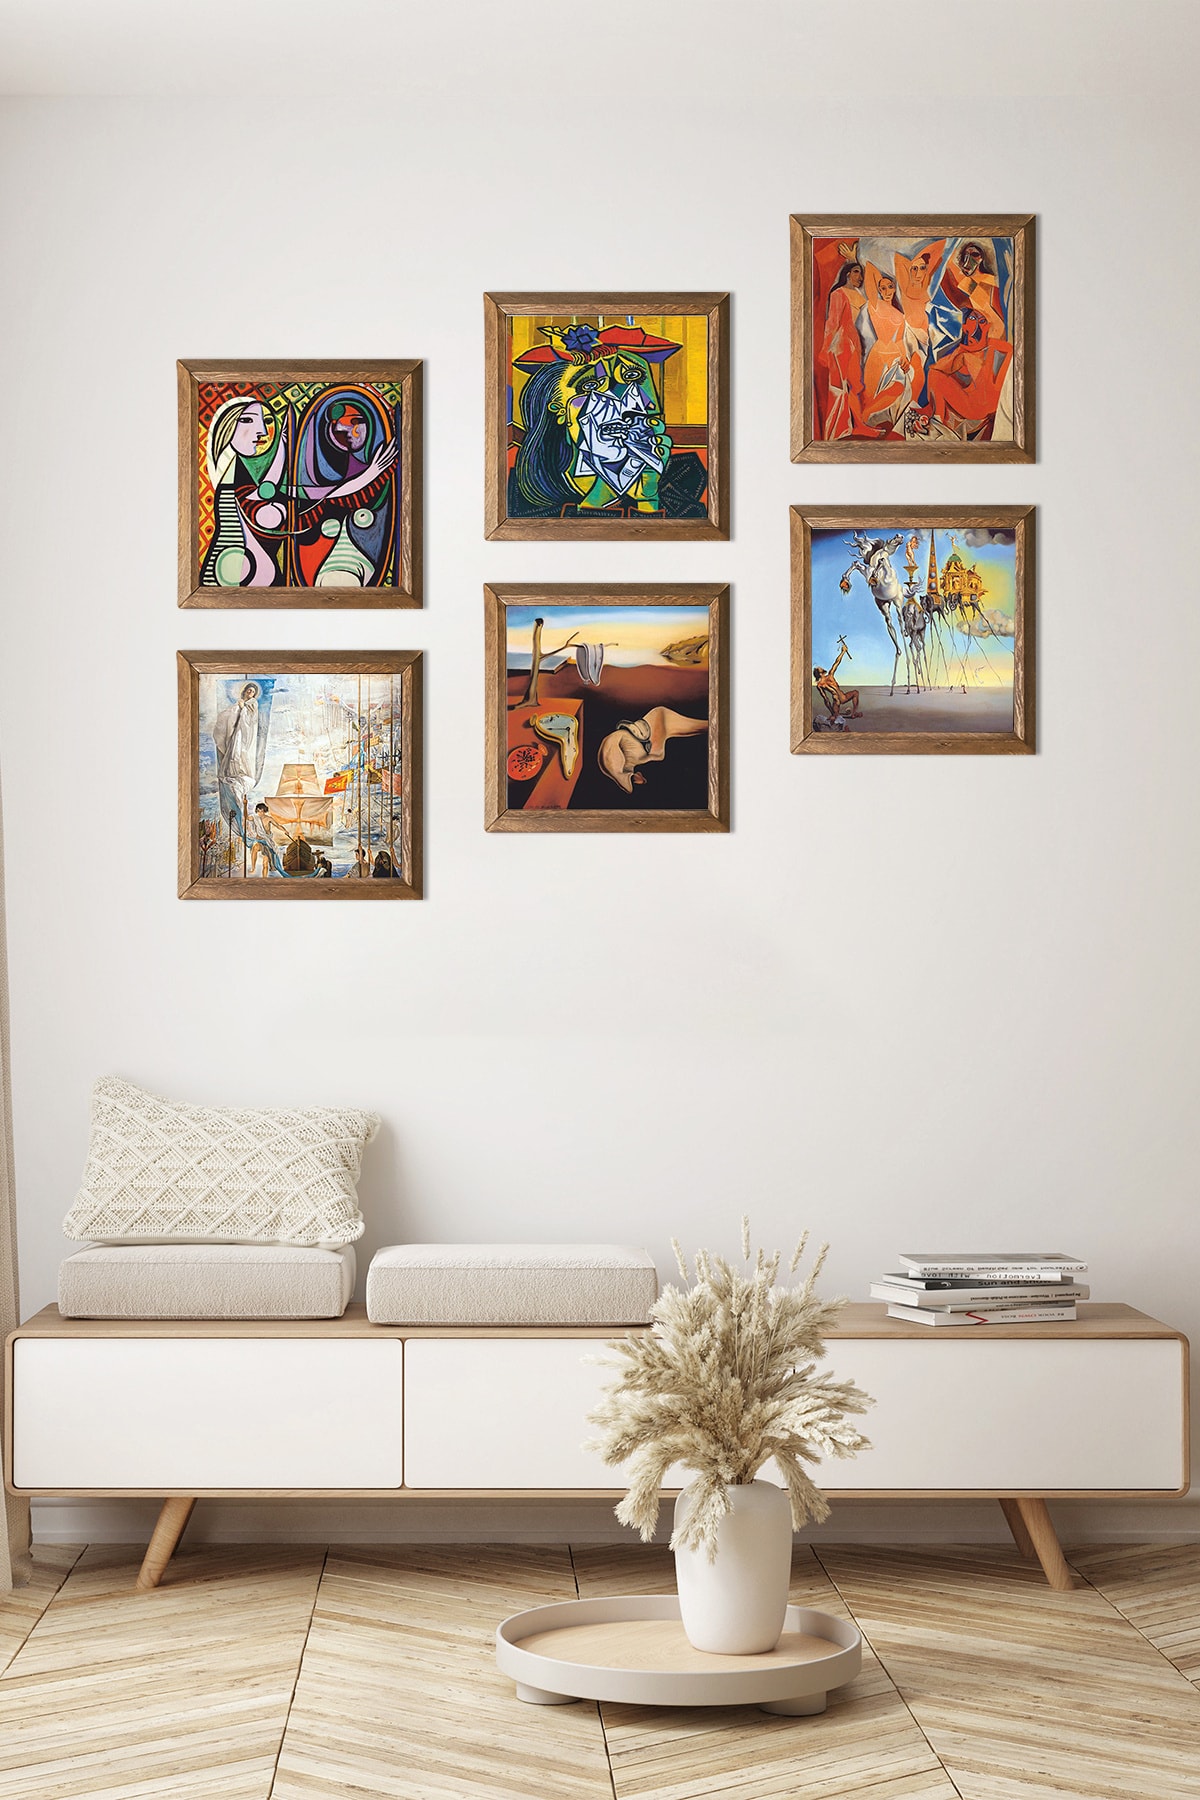 Pinecone Picasso, Salvador Dalí Taş Duvar Tablosu Ahşap Çerçeveli Duvar Dekoru 6 Parça Tablo Seti 25x25cm